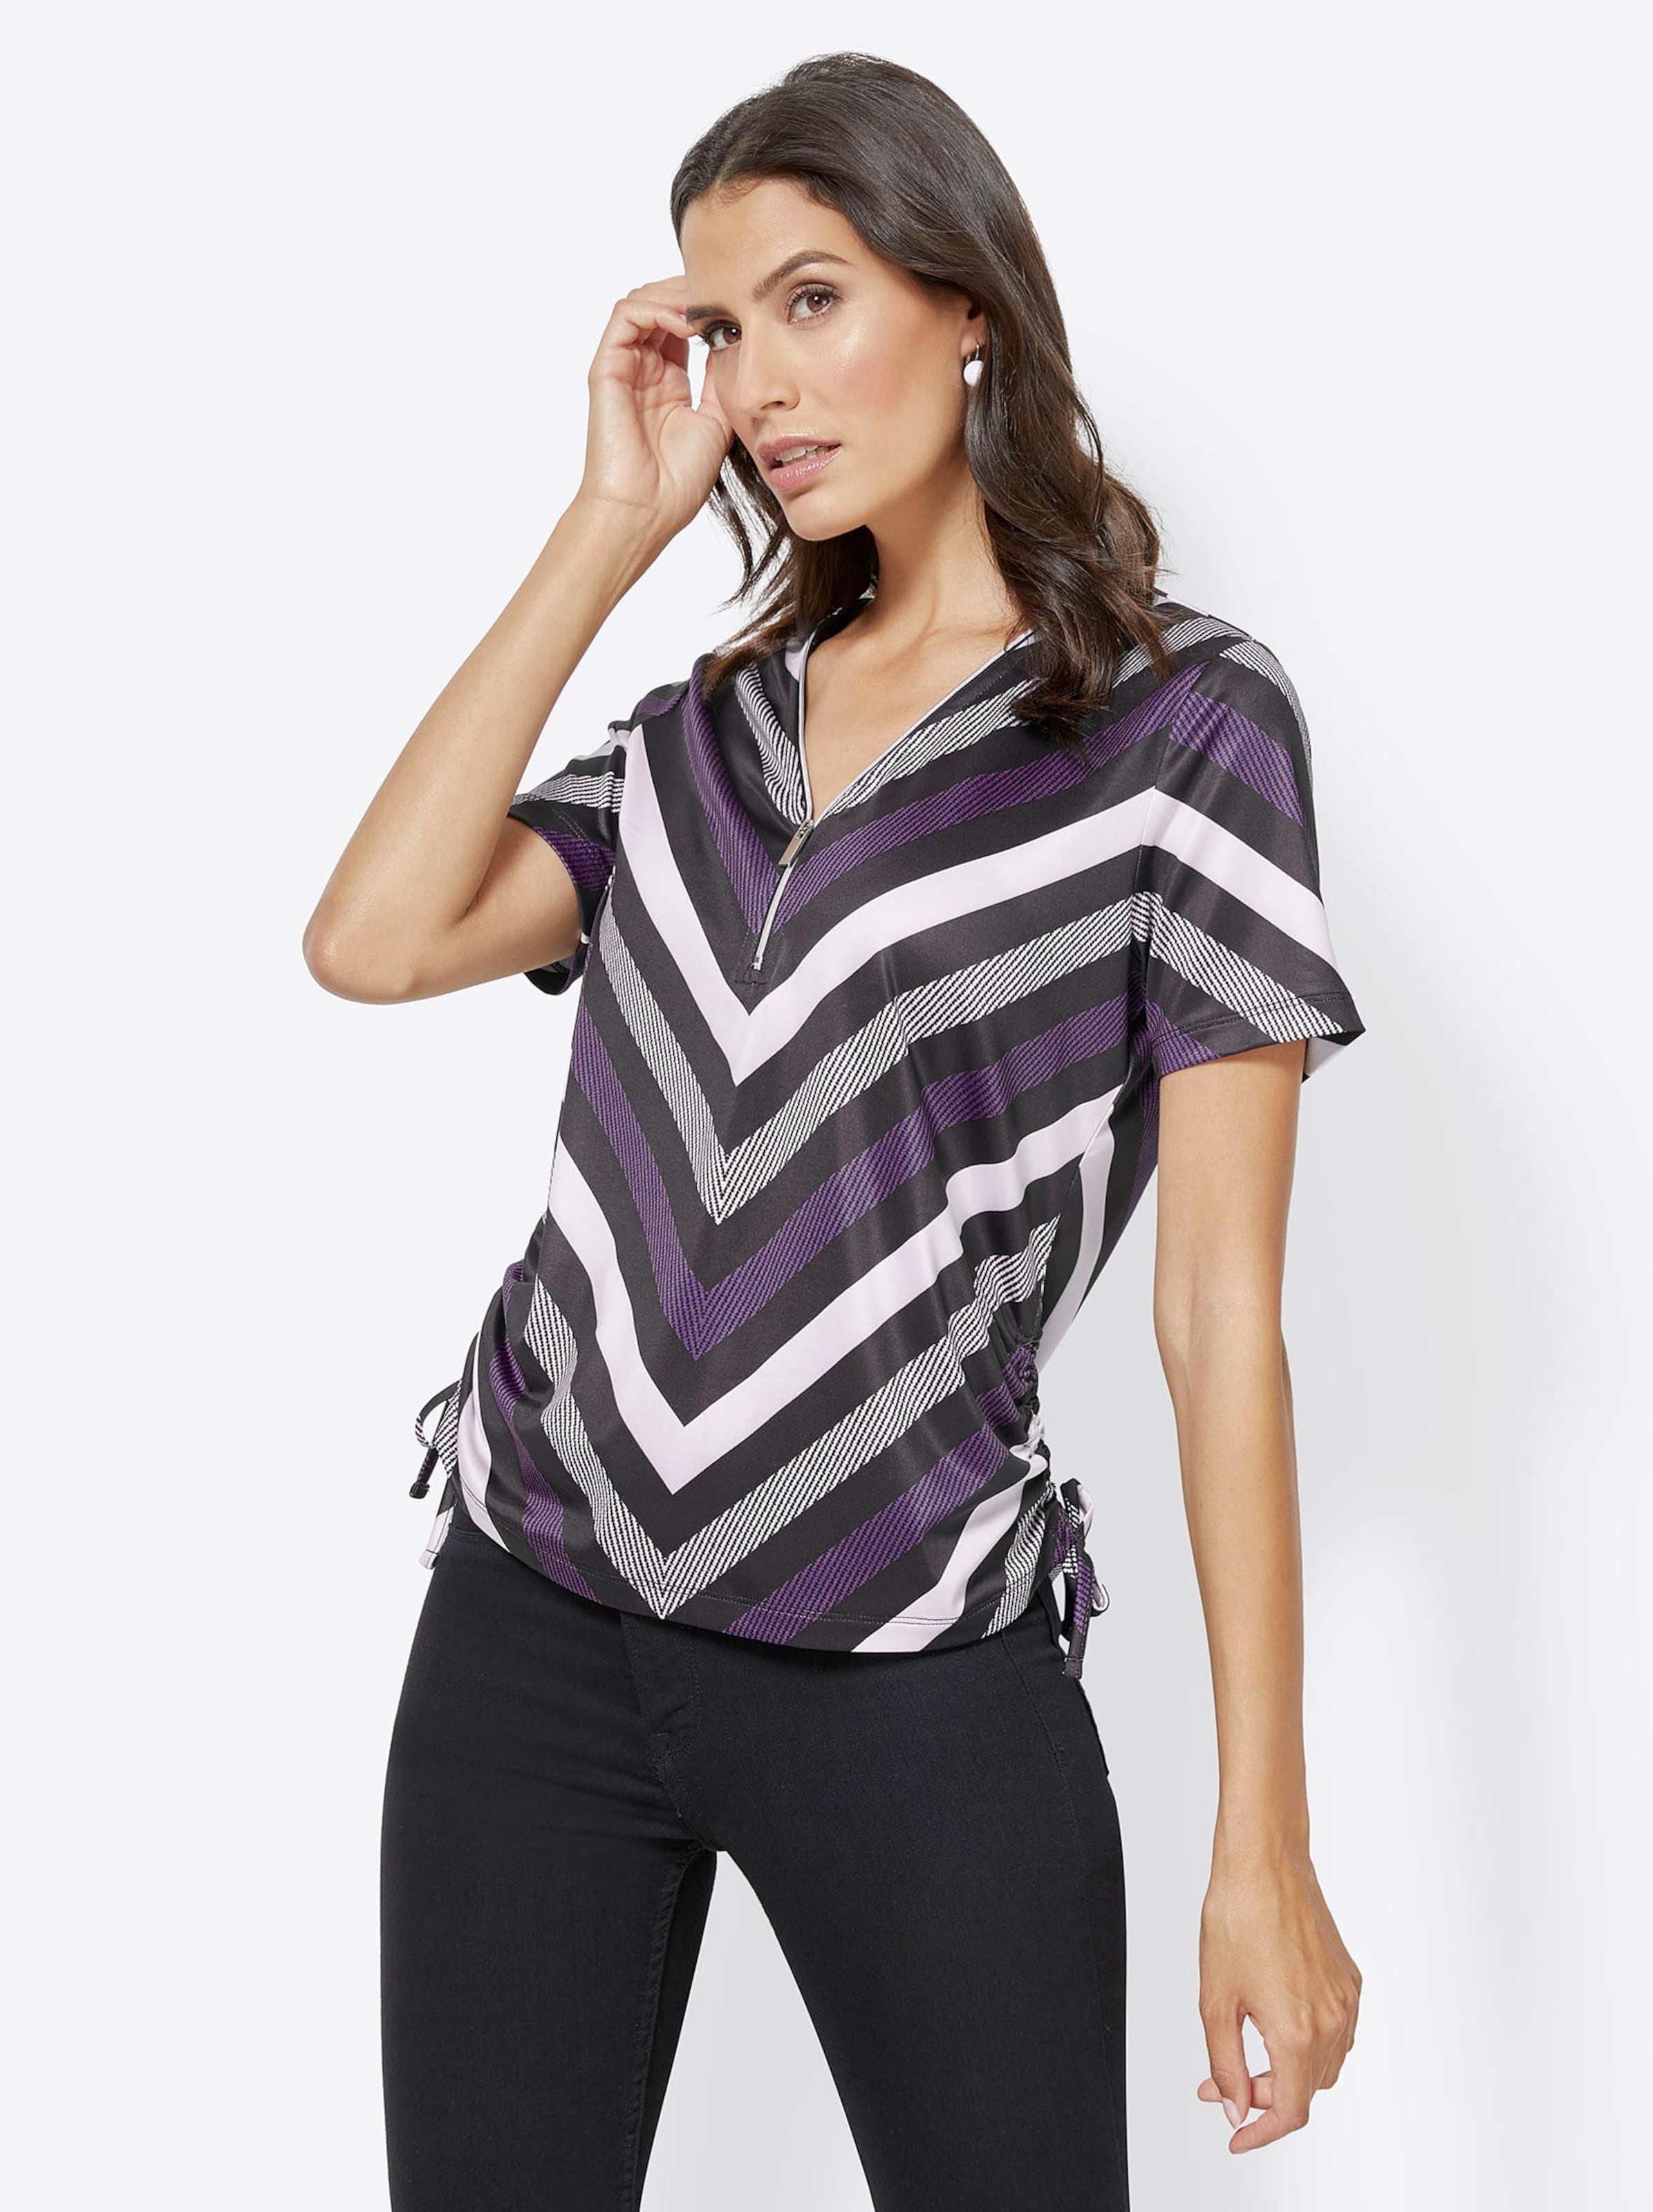 Damenmode Shirts V-Shirt in lila-bedruckt 